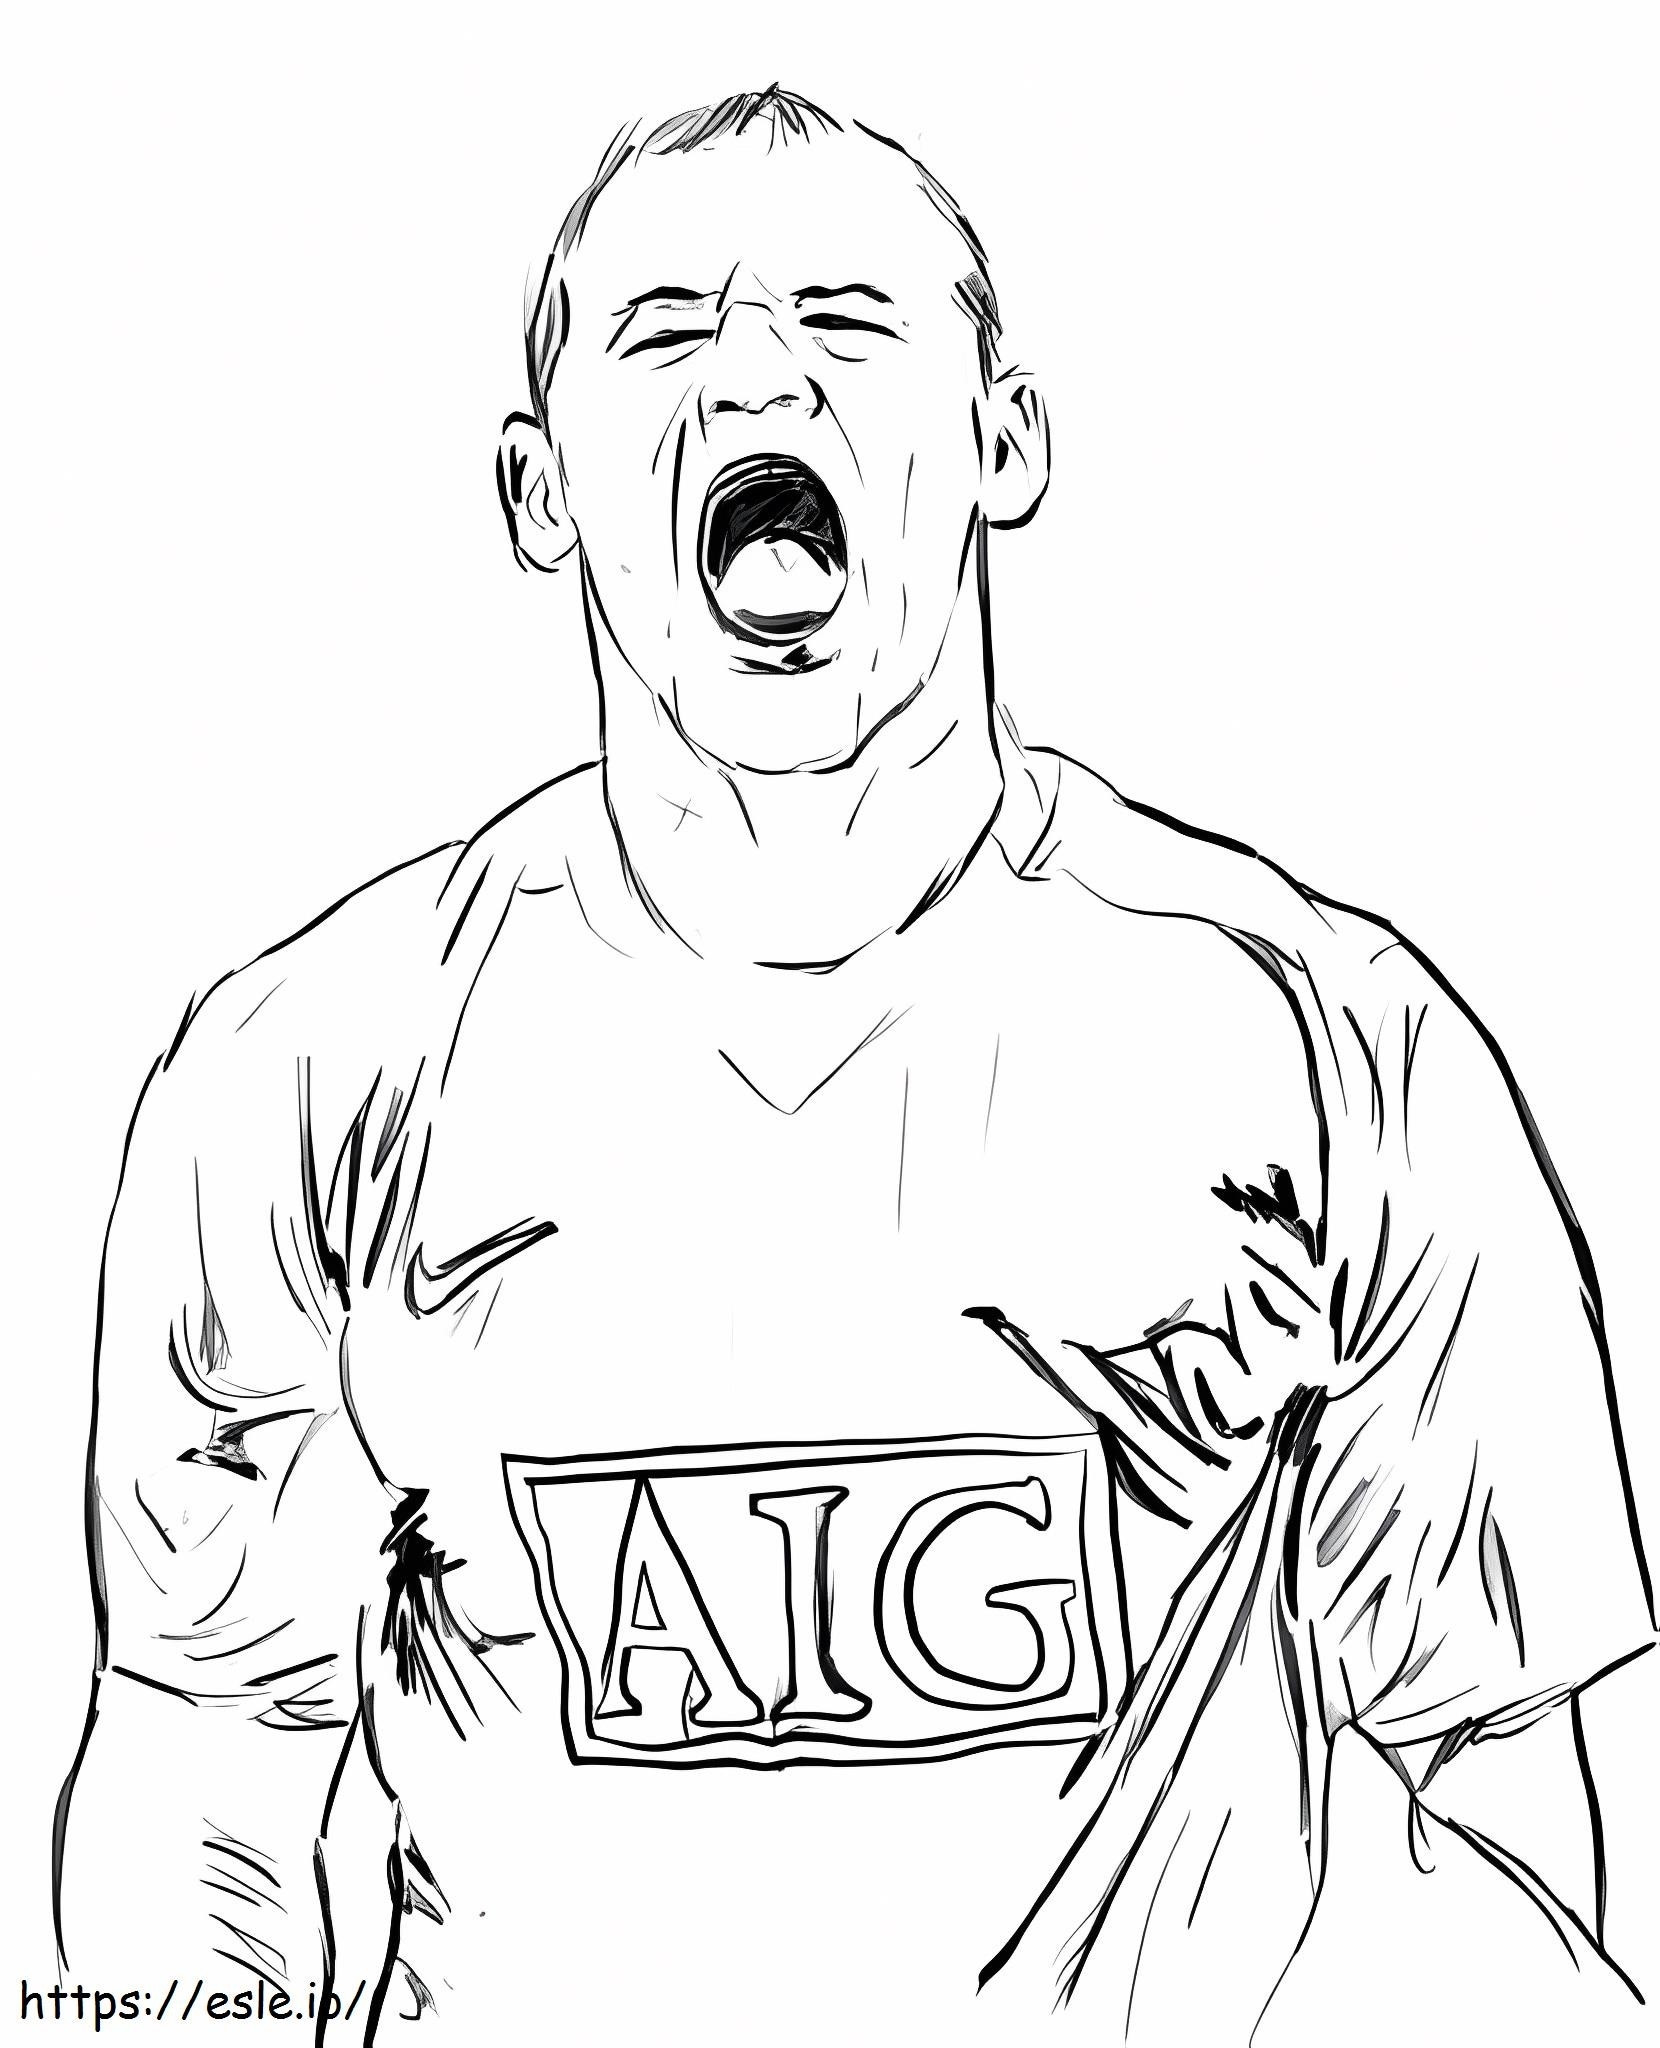 Wayne Rooney Scream coloring page